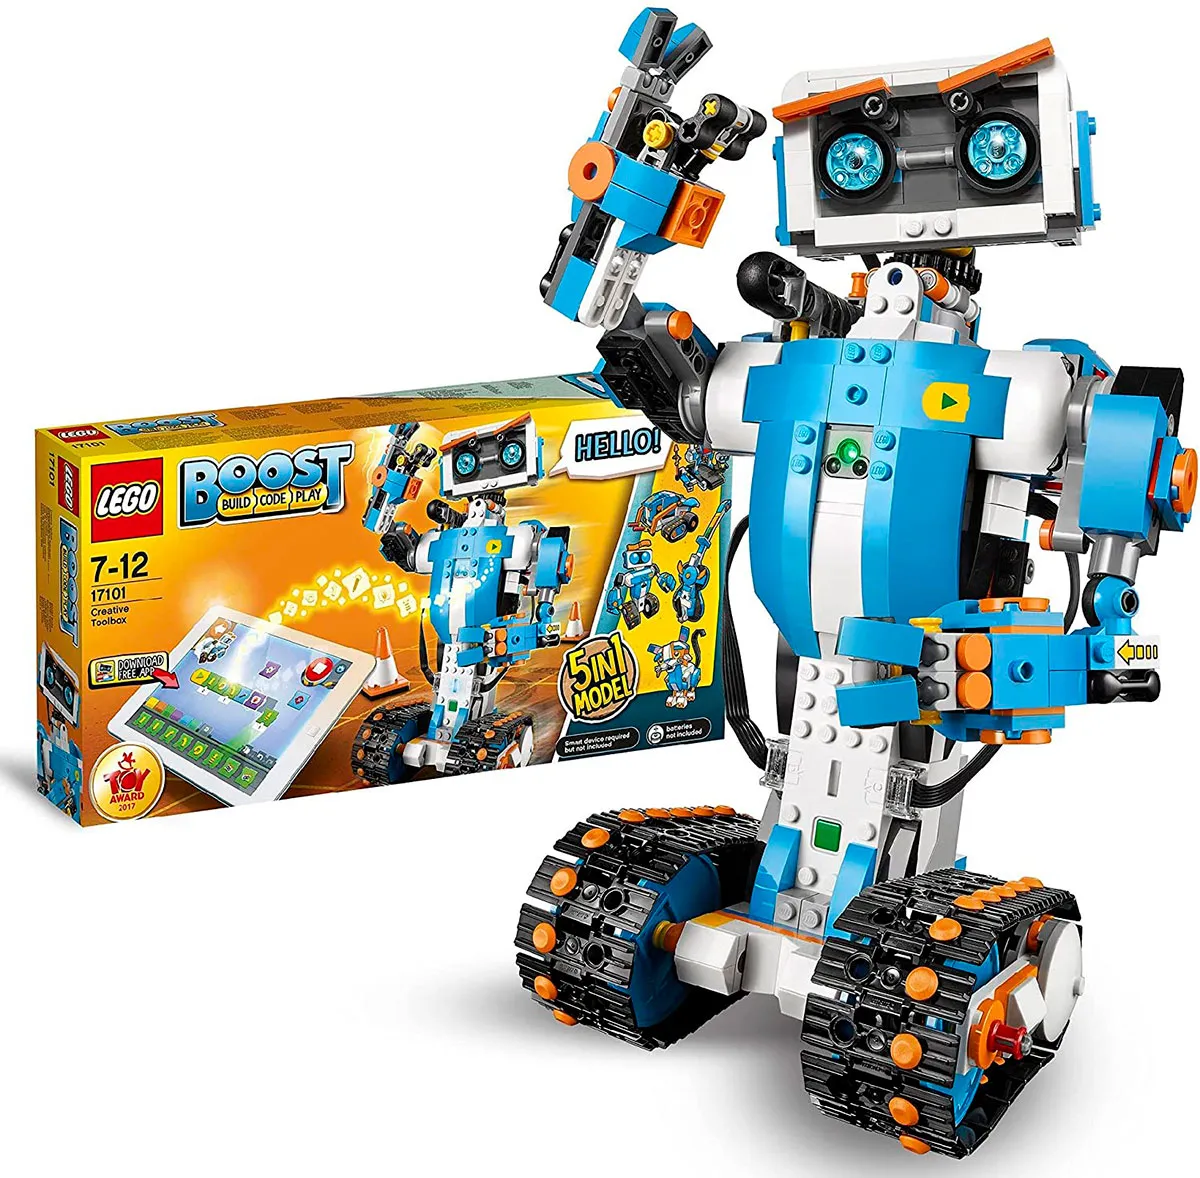 https://c02.purpledshub.com/uploads/sites/41/2021/11/Lego-BOOST-Creative-Toolbox-coding-toys-for-kids-ce4adde.jpg?webp=1&w=1200